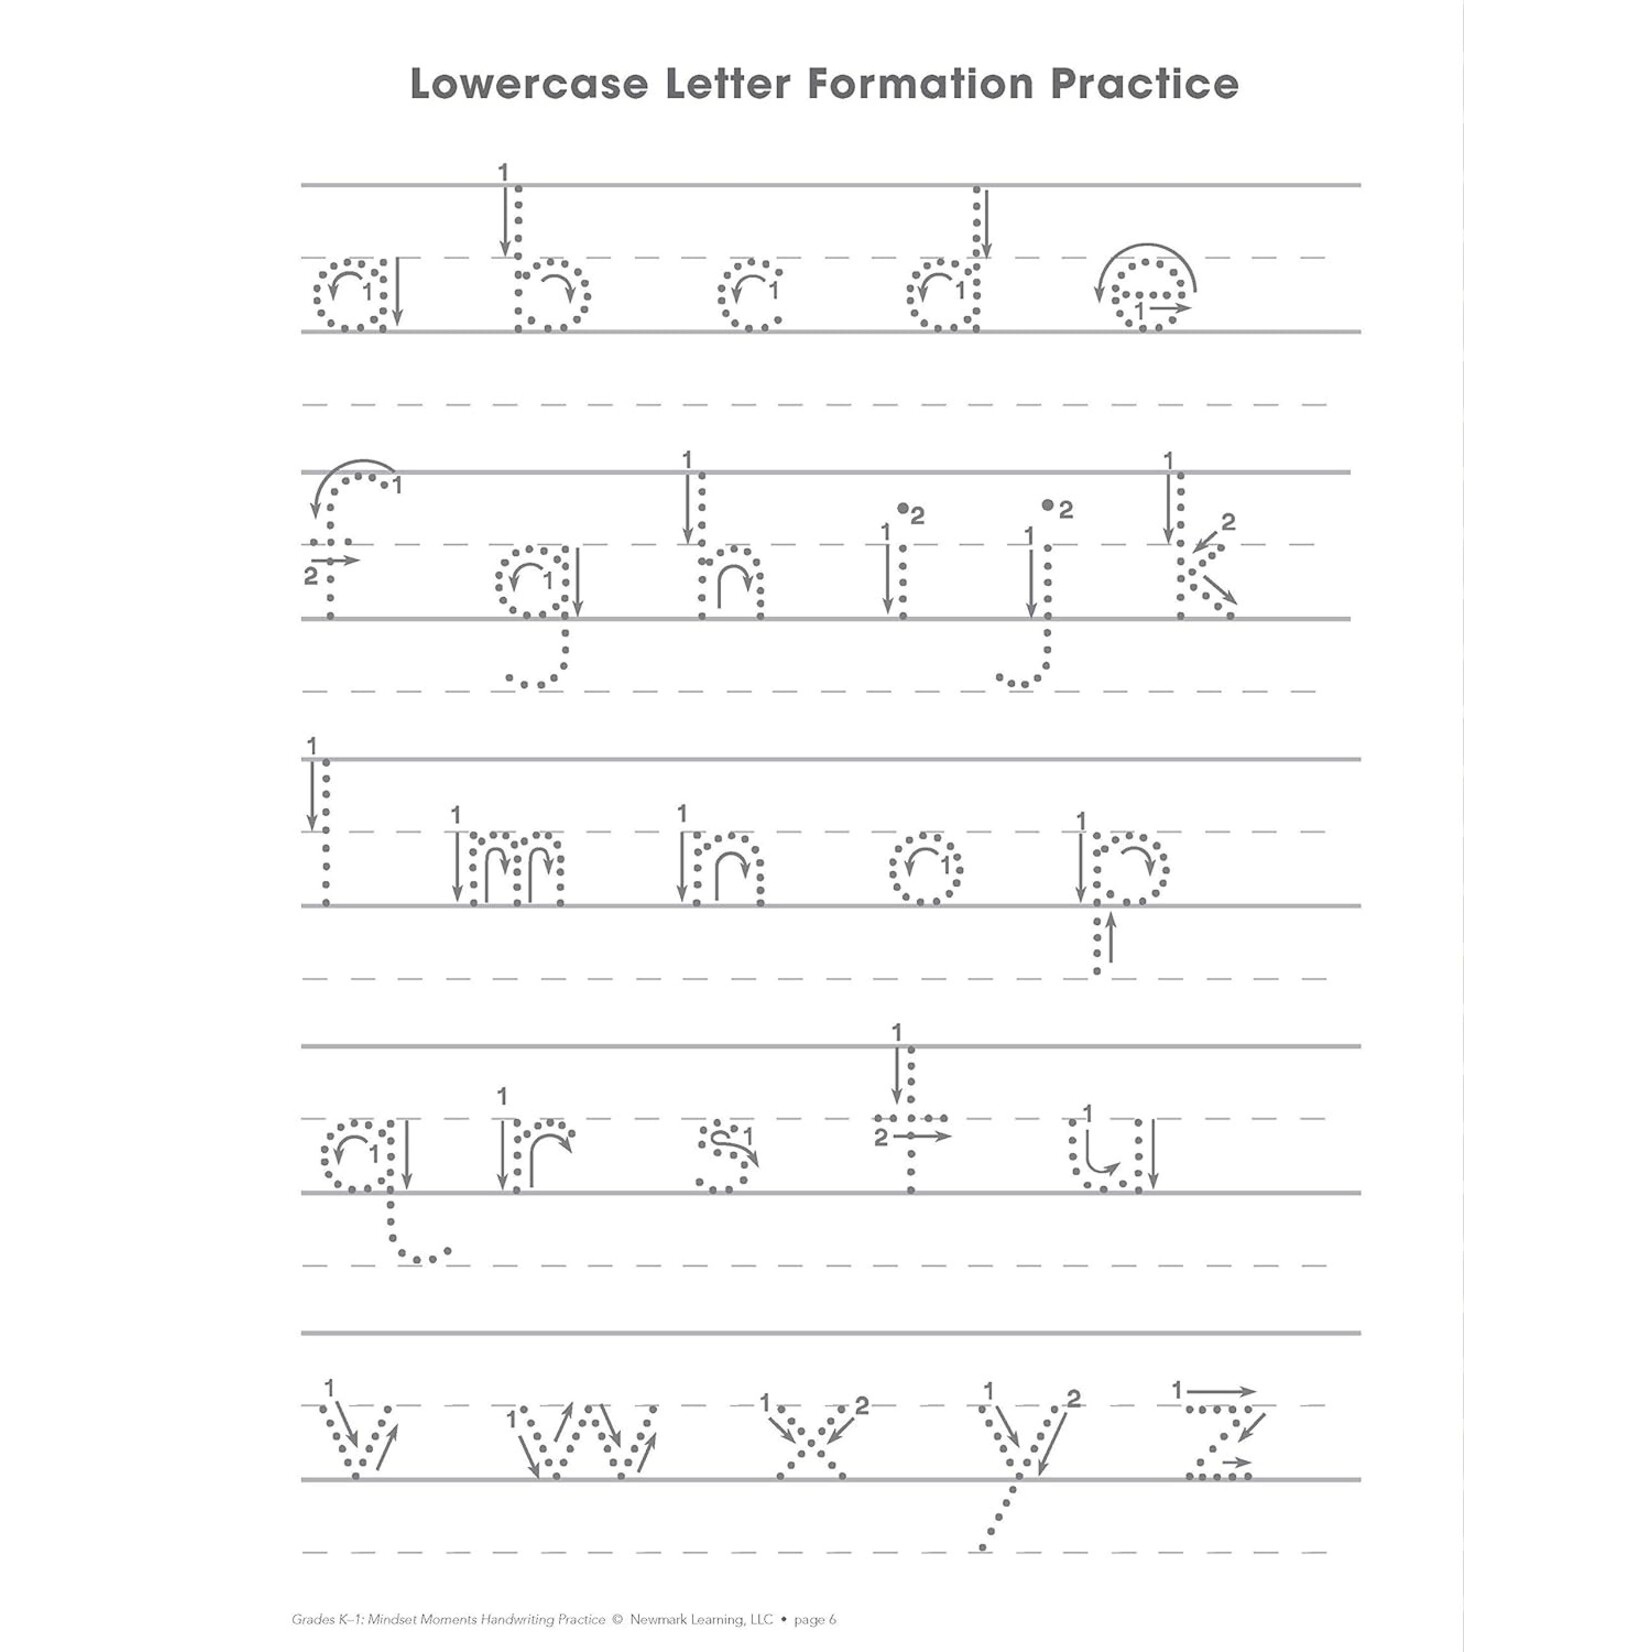 Handwriting Practice Manuscript Gr. K-1 - Mindset Moments